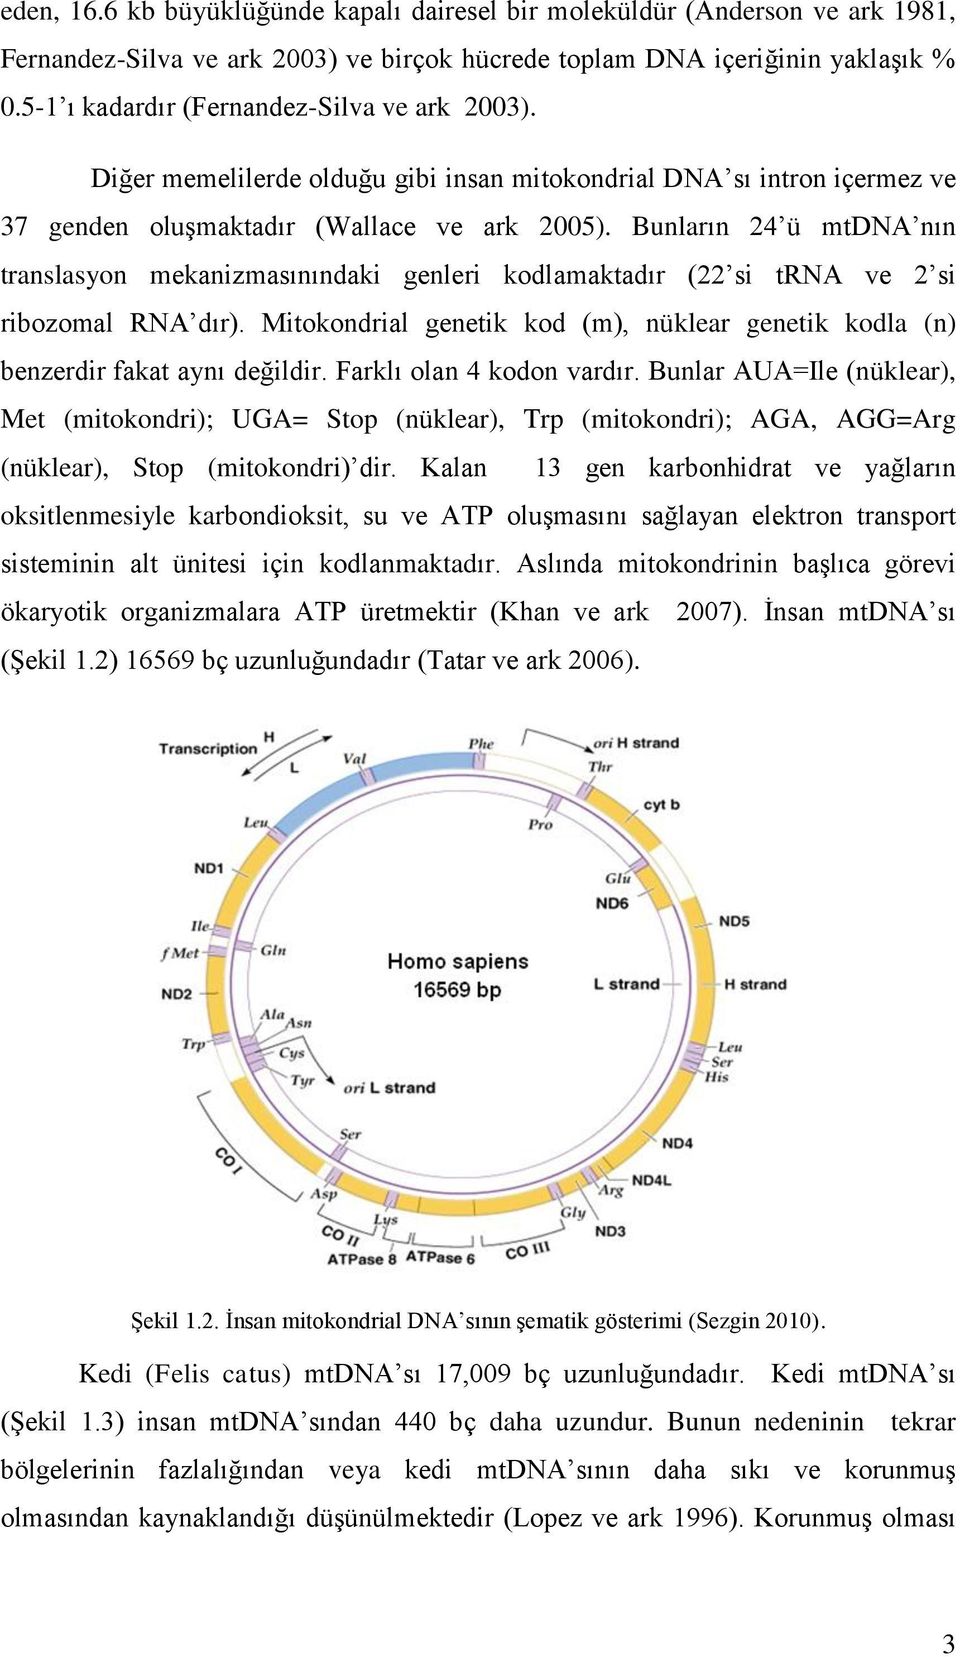 Bunların 24 ü mtdna nın translasyon mekanizmasınındaki genleri kodlamaktadır (22 si trna ve 2 si ribozomal RNA dır).